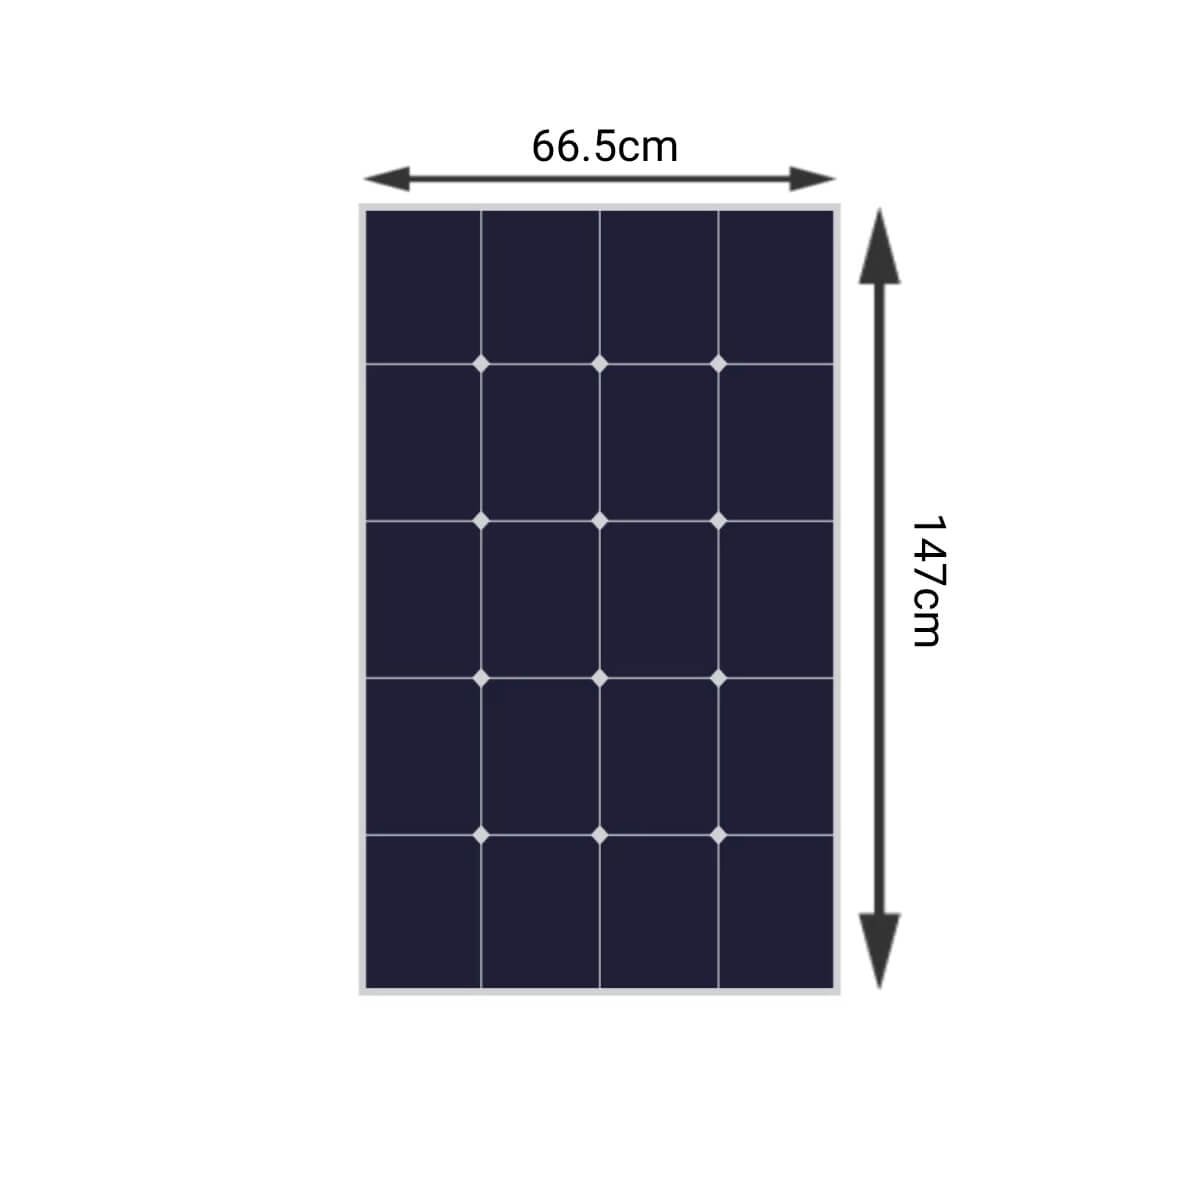 180W Flexible Solar Panel Kit – 1x 180W dimensions narrow